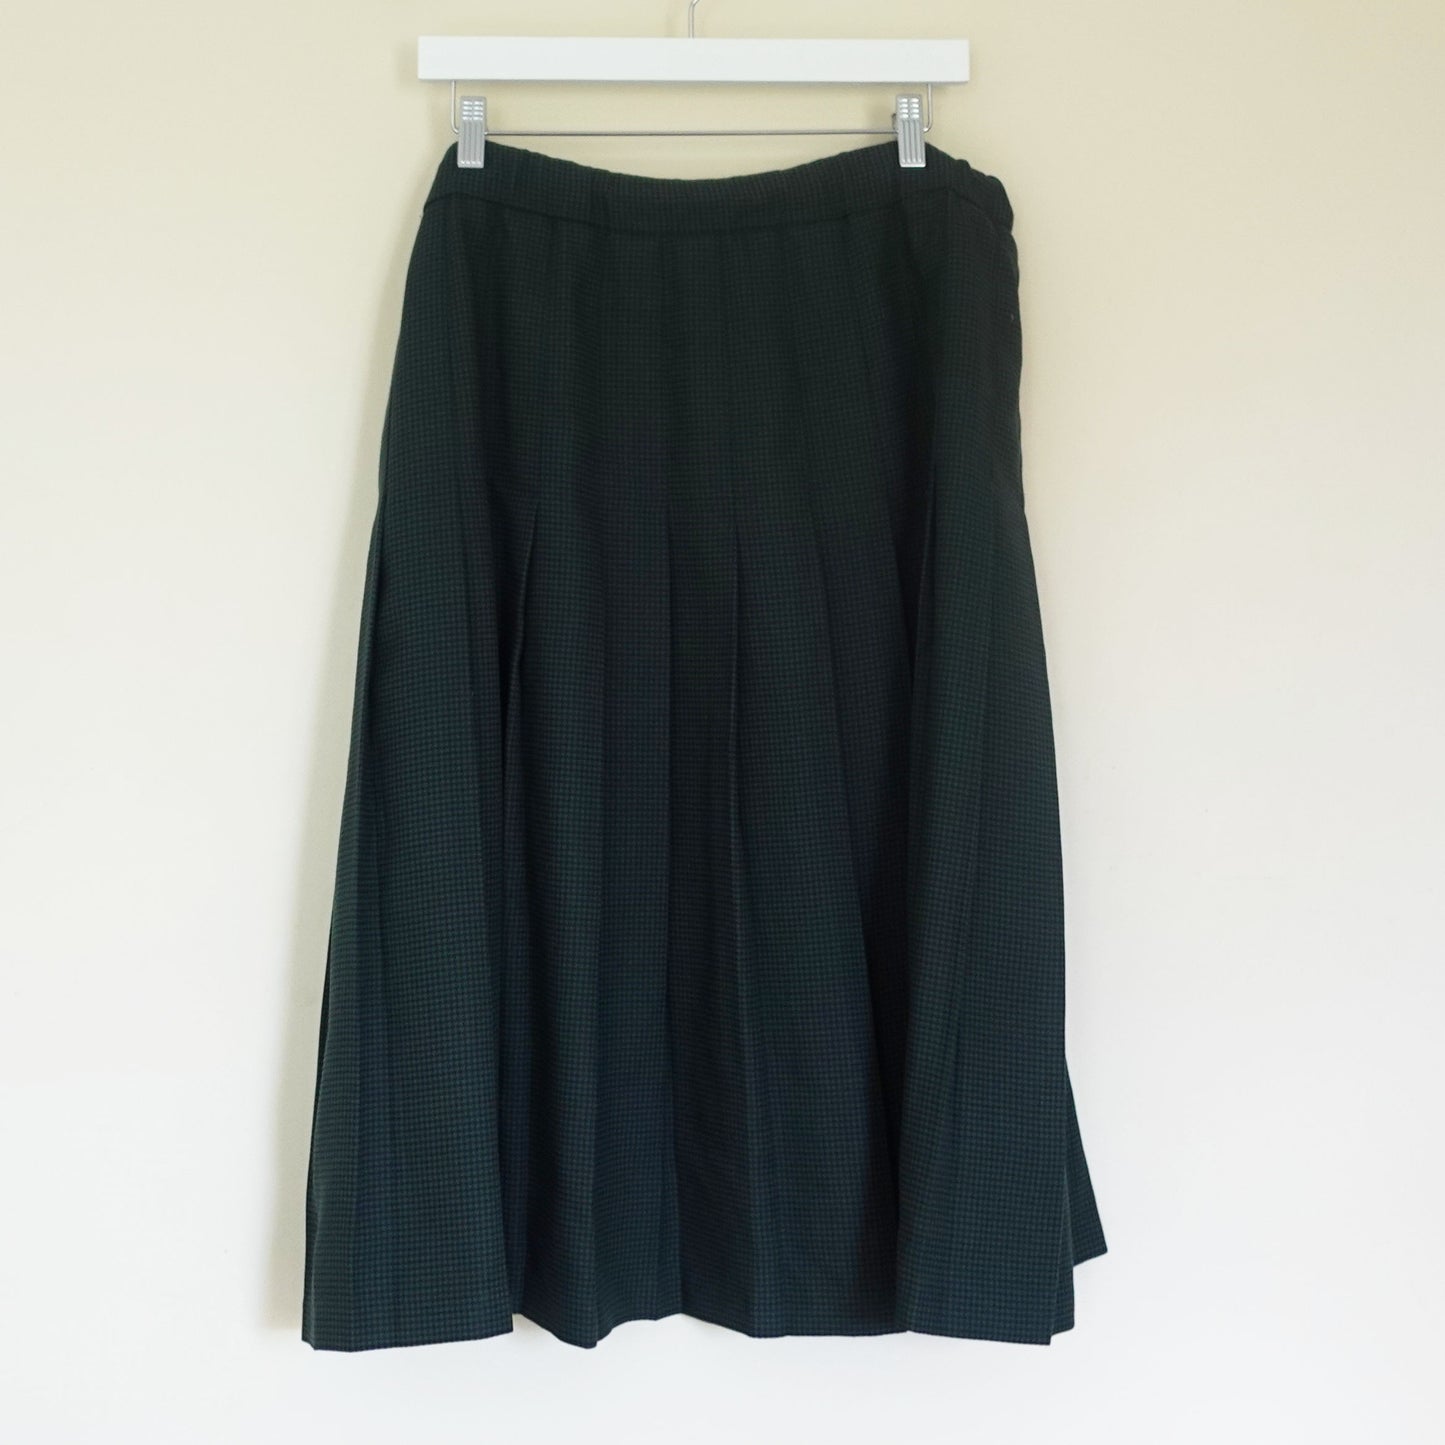 dark green houndstooth skirt